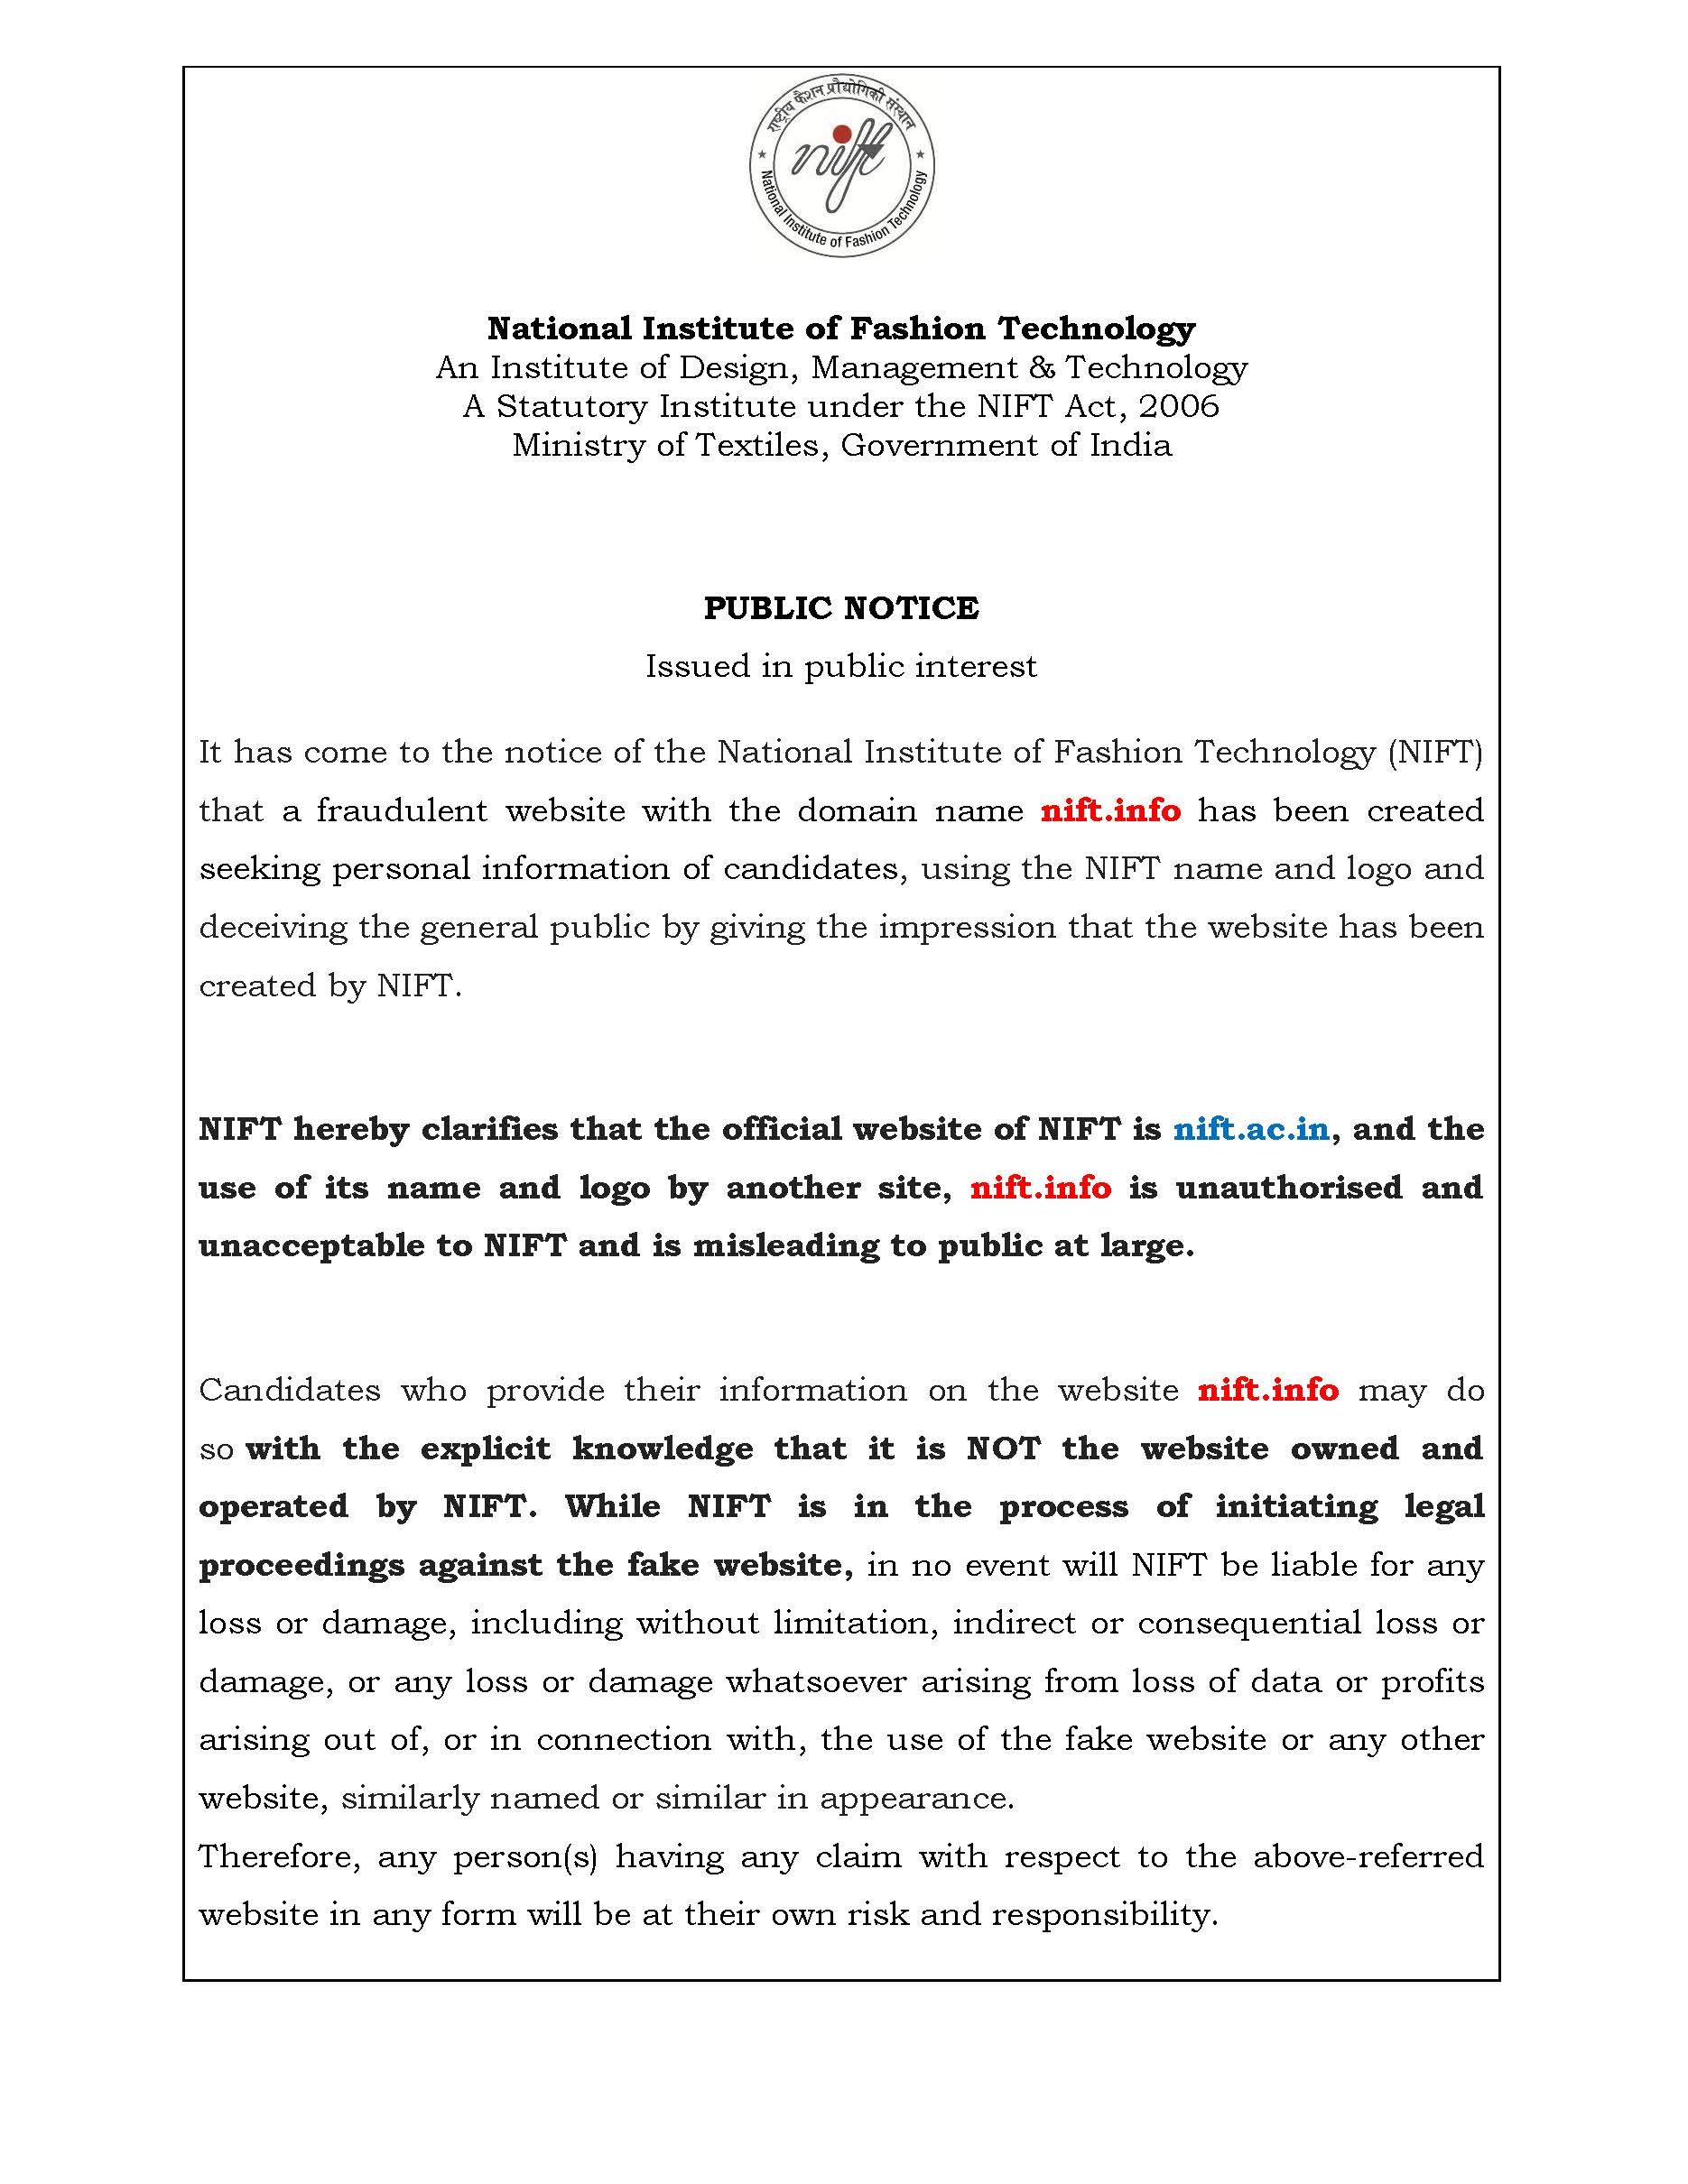 Public notice NIFT website